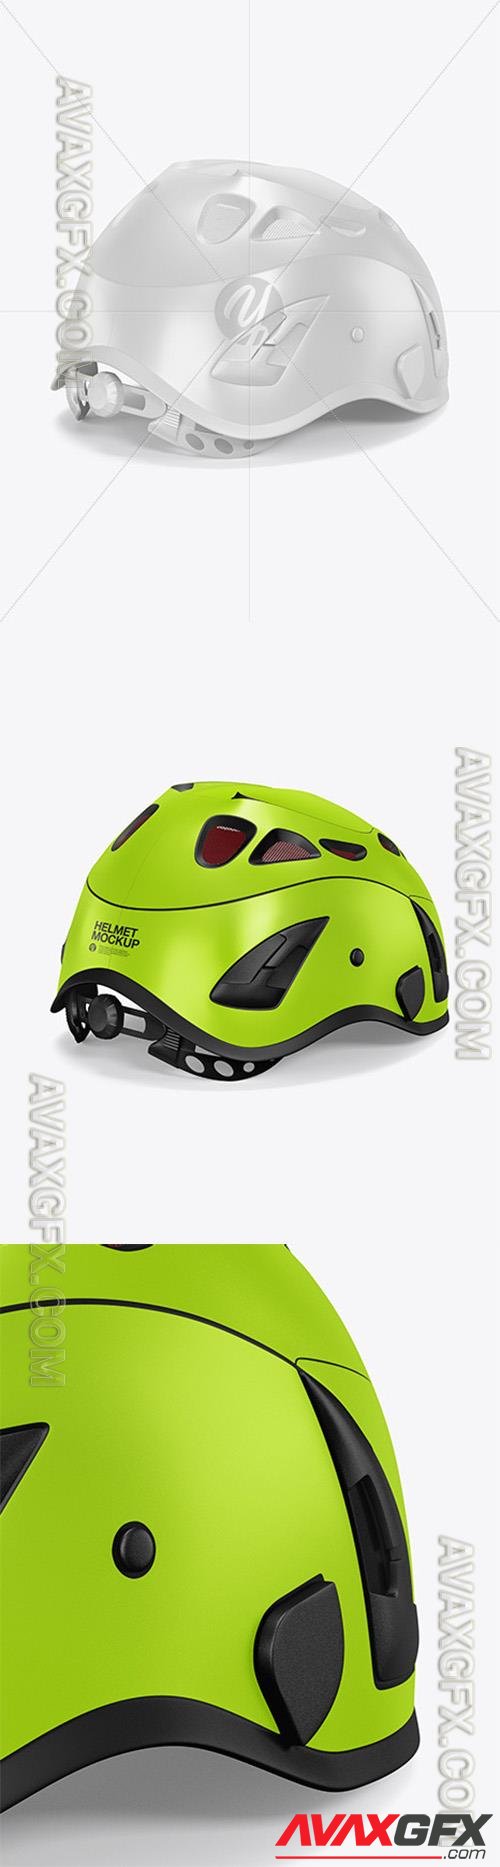 Cycling Helmet Mockup 75316